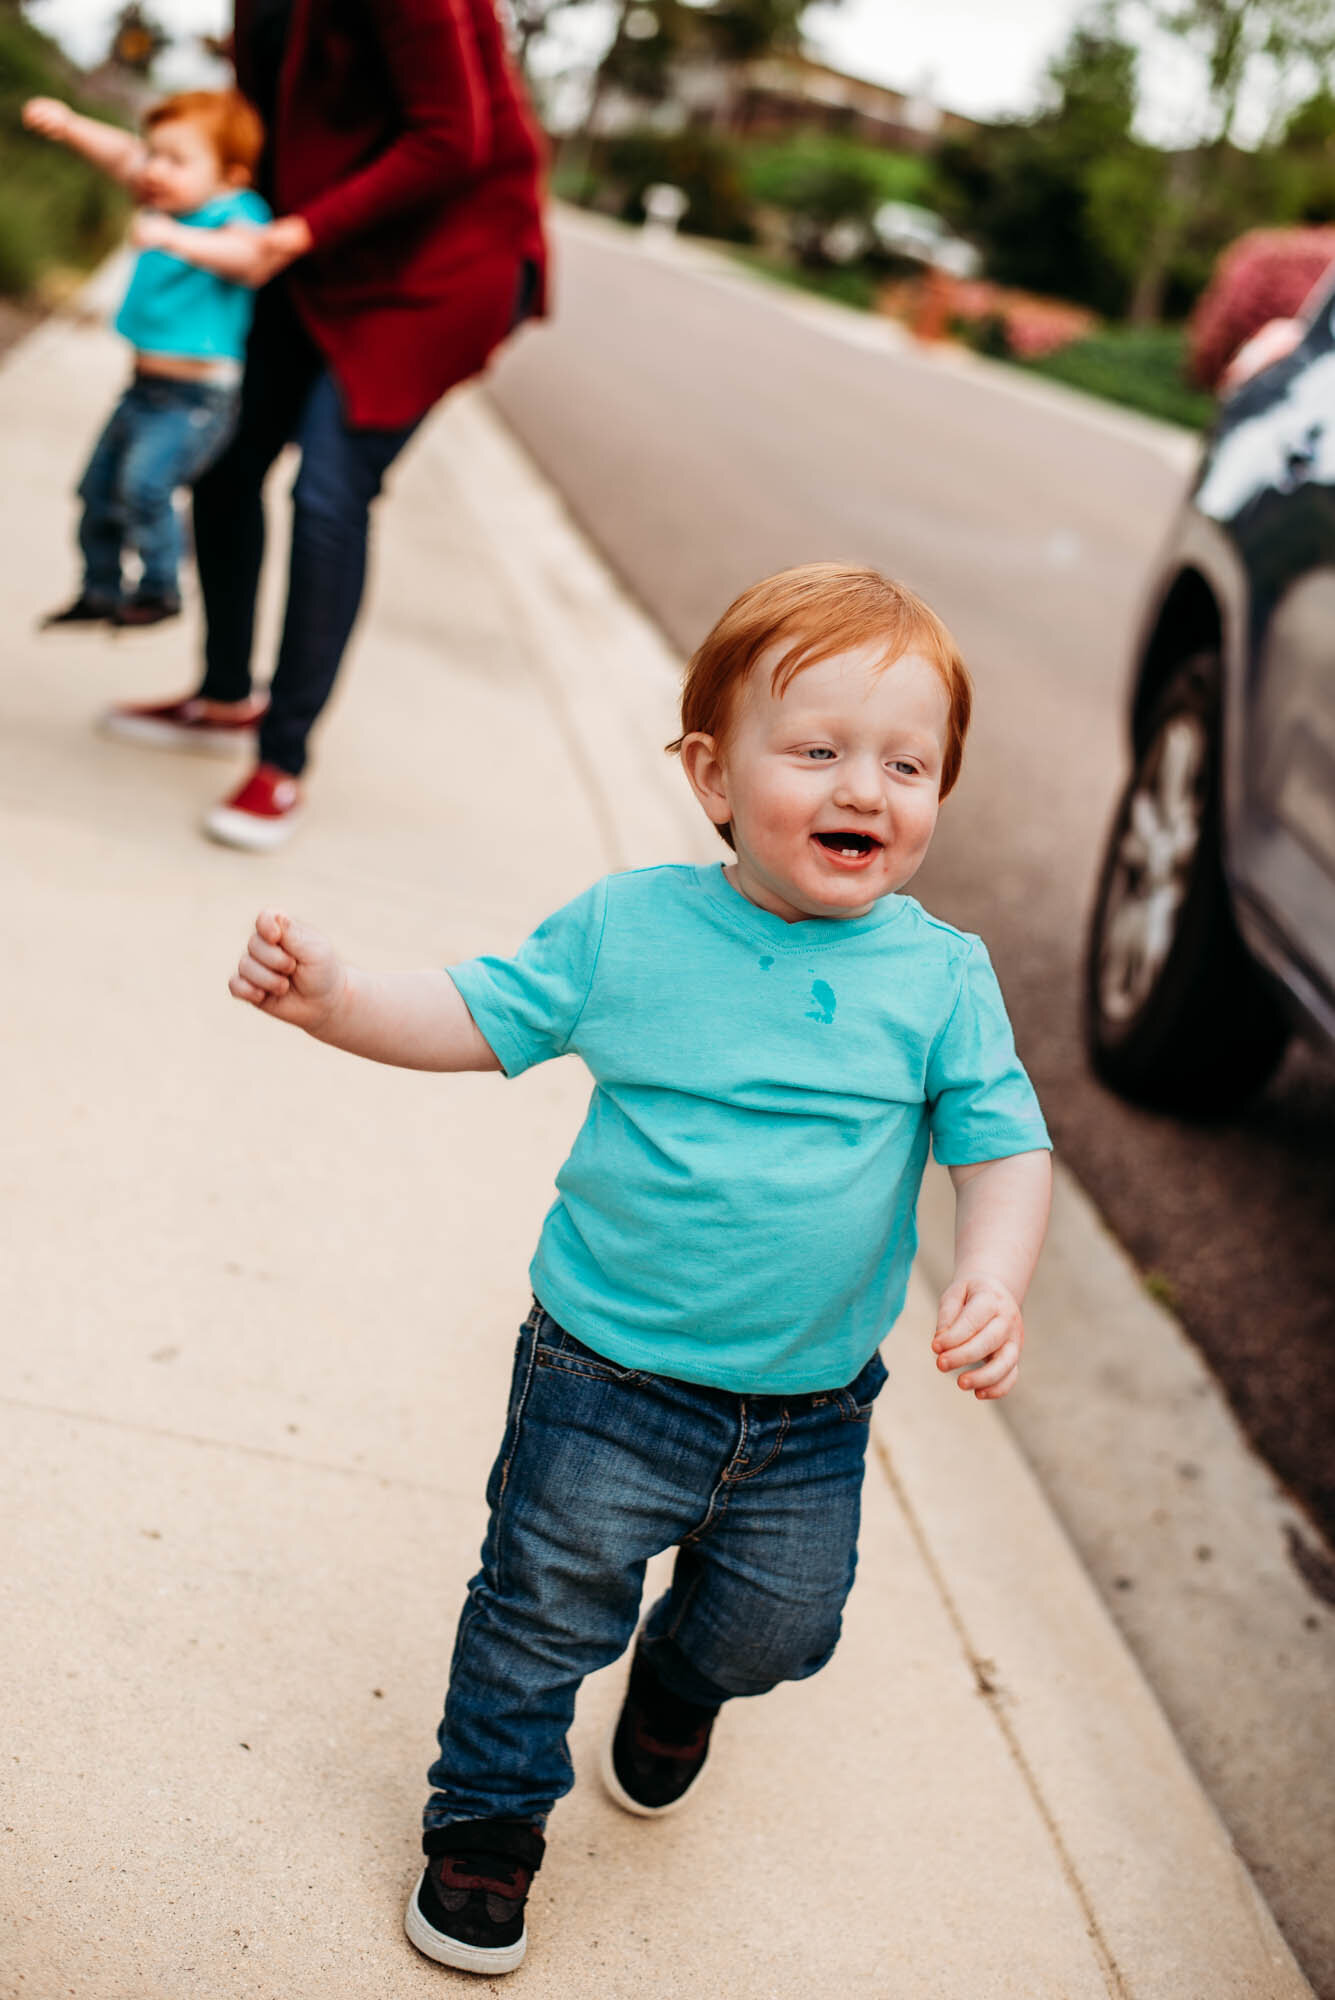 Toddler runs from grandmother during photos at Carlsbad area park